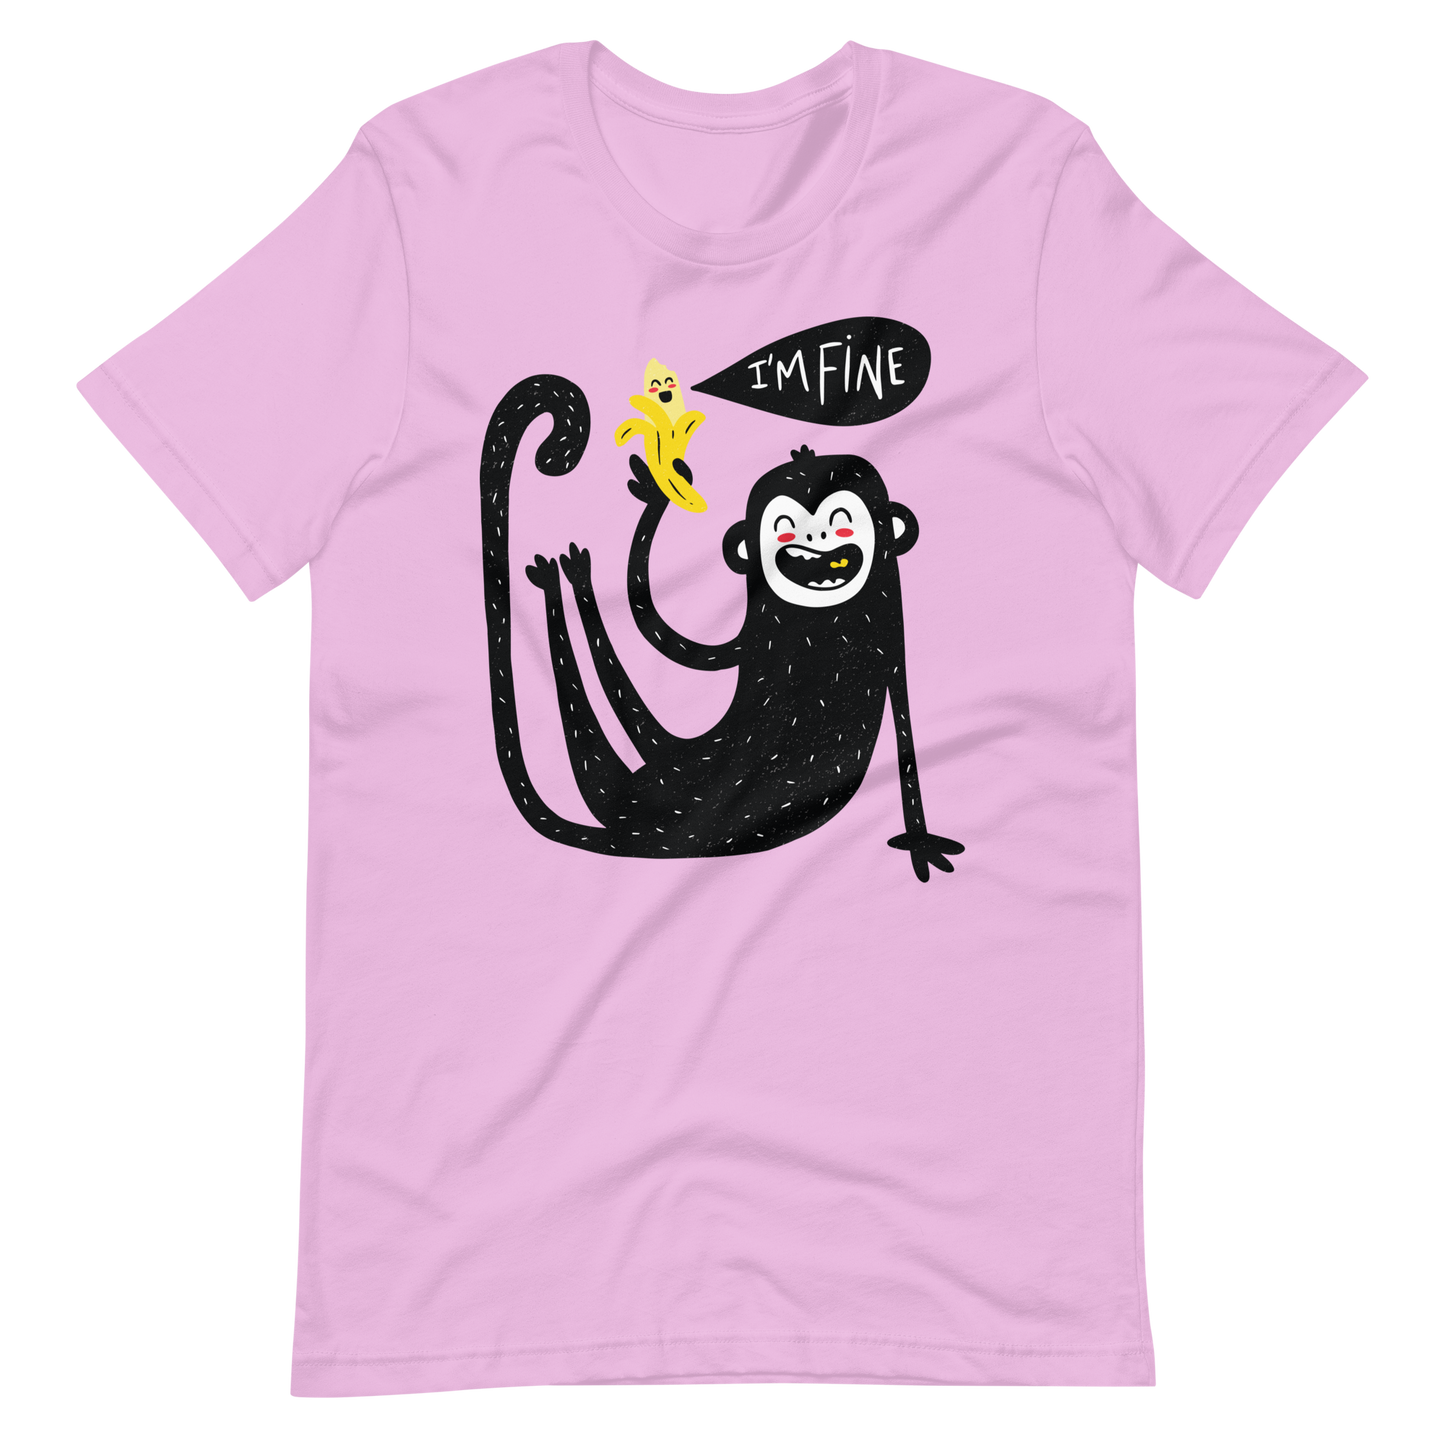 Cute Monkey | Unisex t-shirt